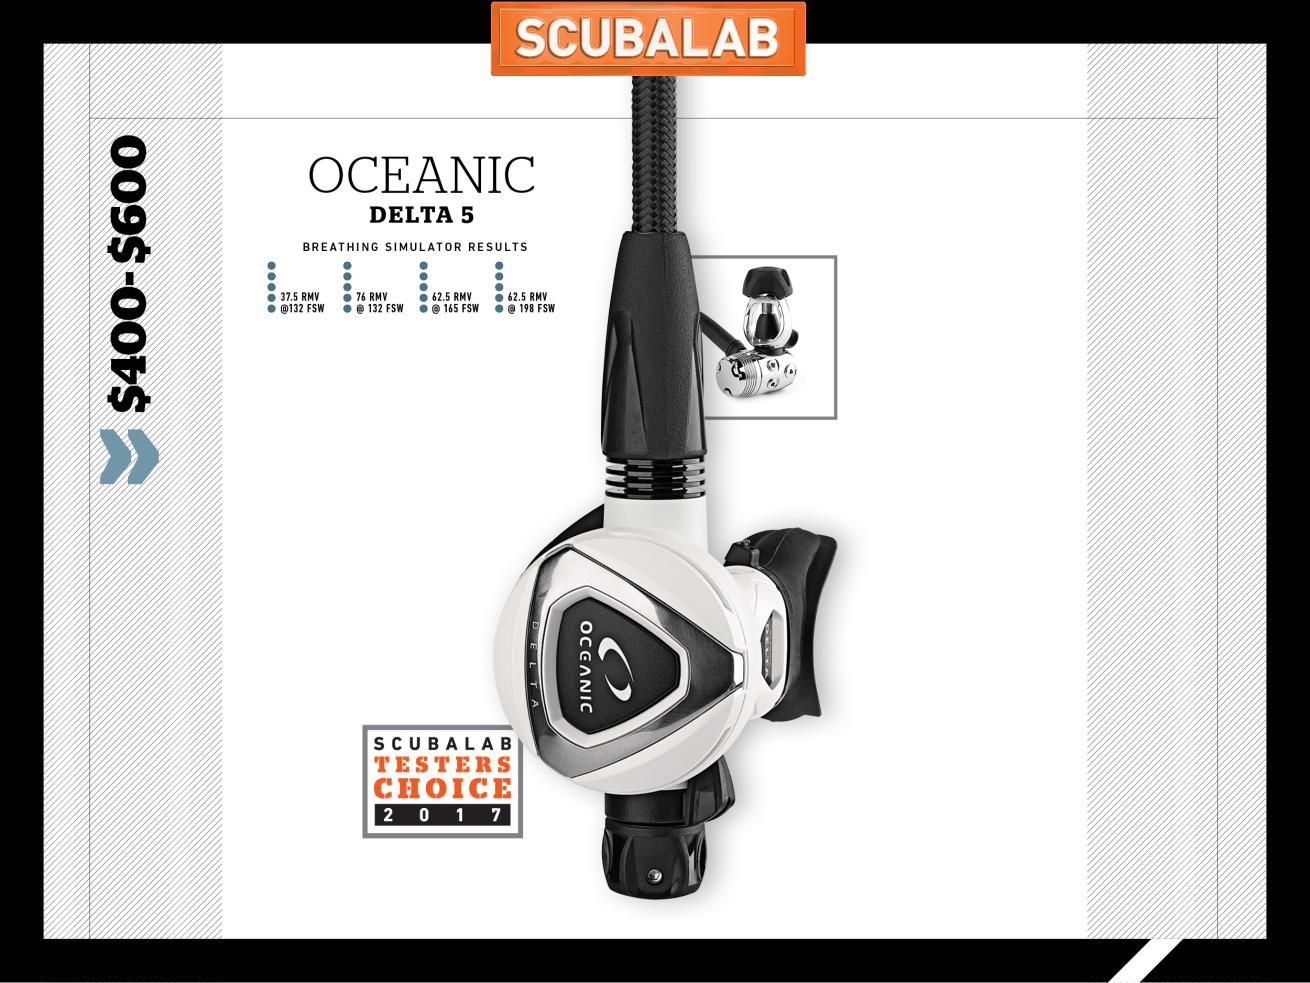 Oceanic Delta 5 scuba diving regulator ScubaLab review